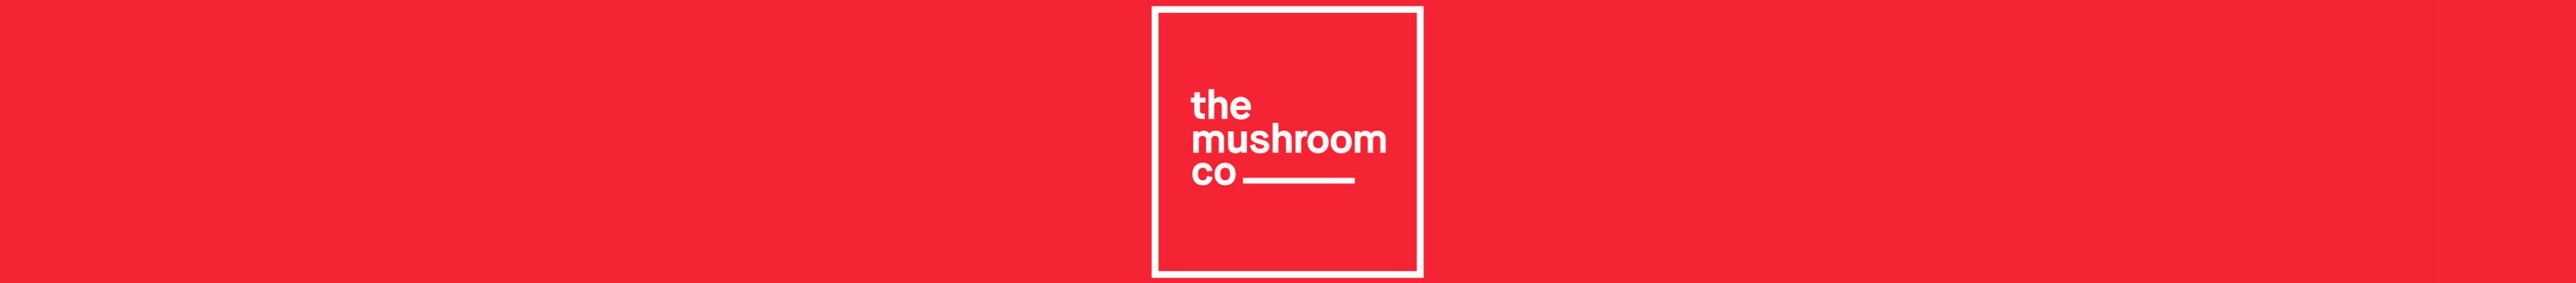 THE MUSHROOM COMPANY's profile banner